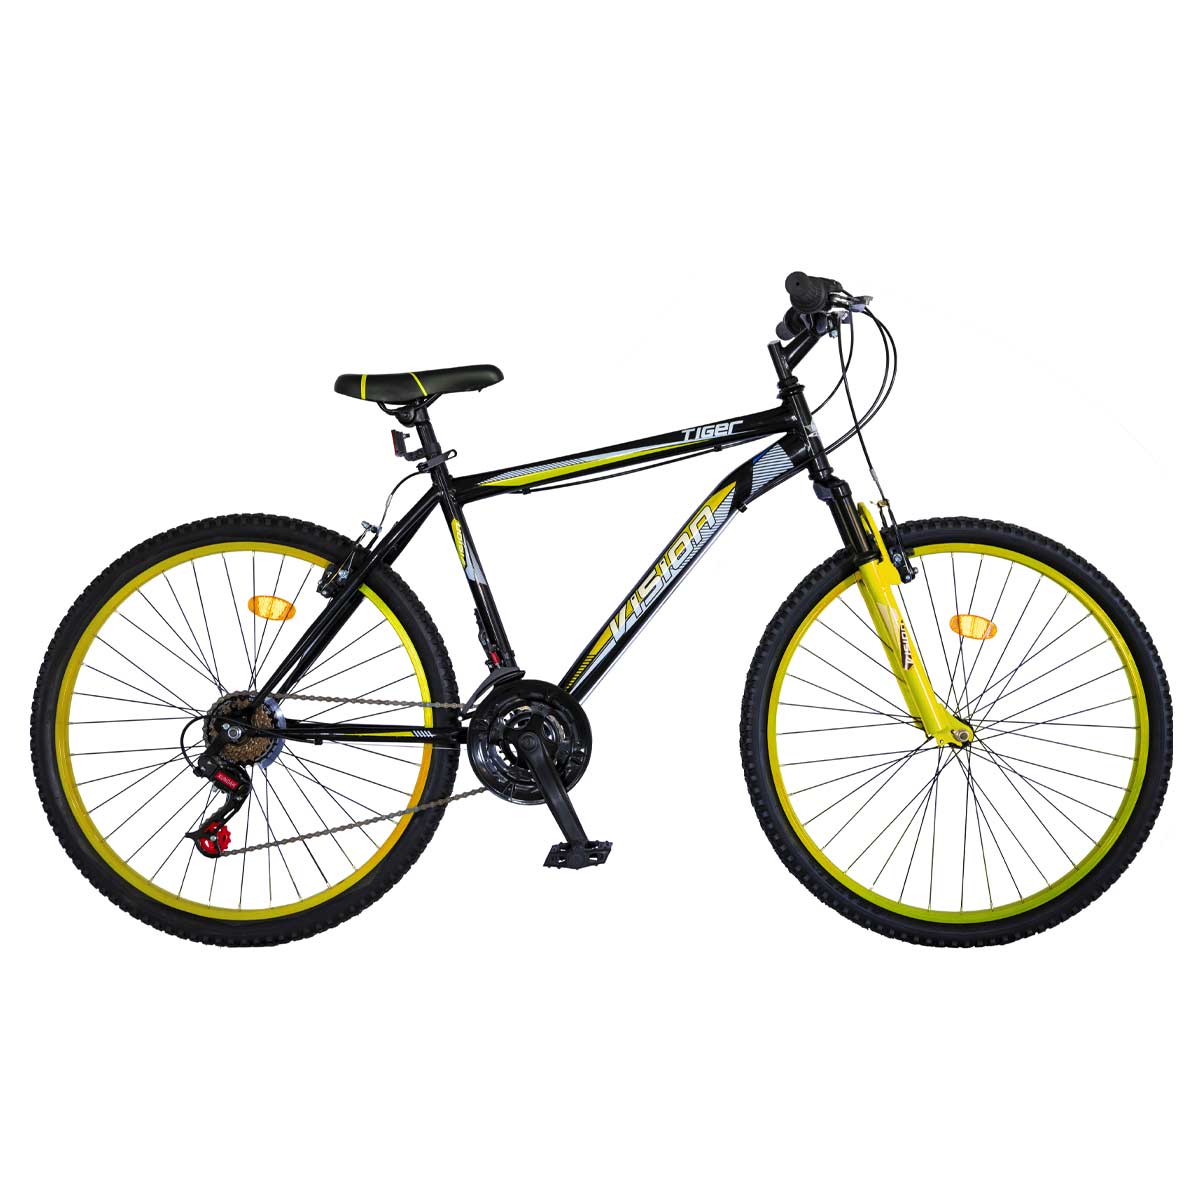 Pexma Belderia велосипед. Черно желтый велосипед помятый. Belderia. Vision a24.